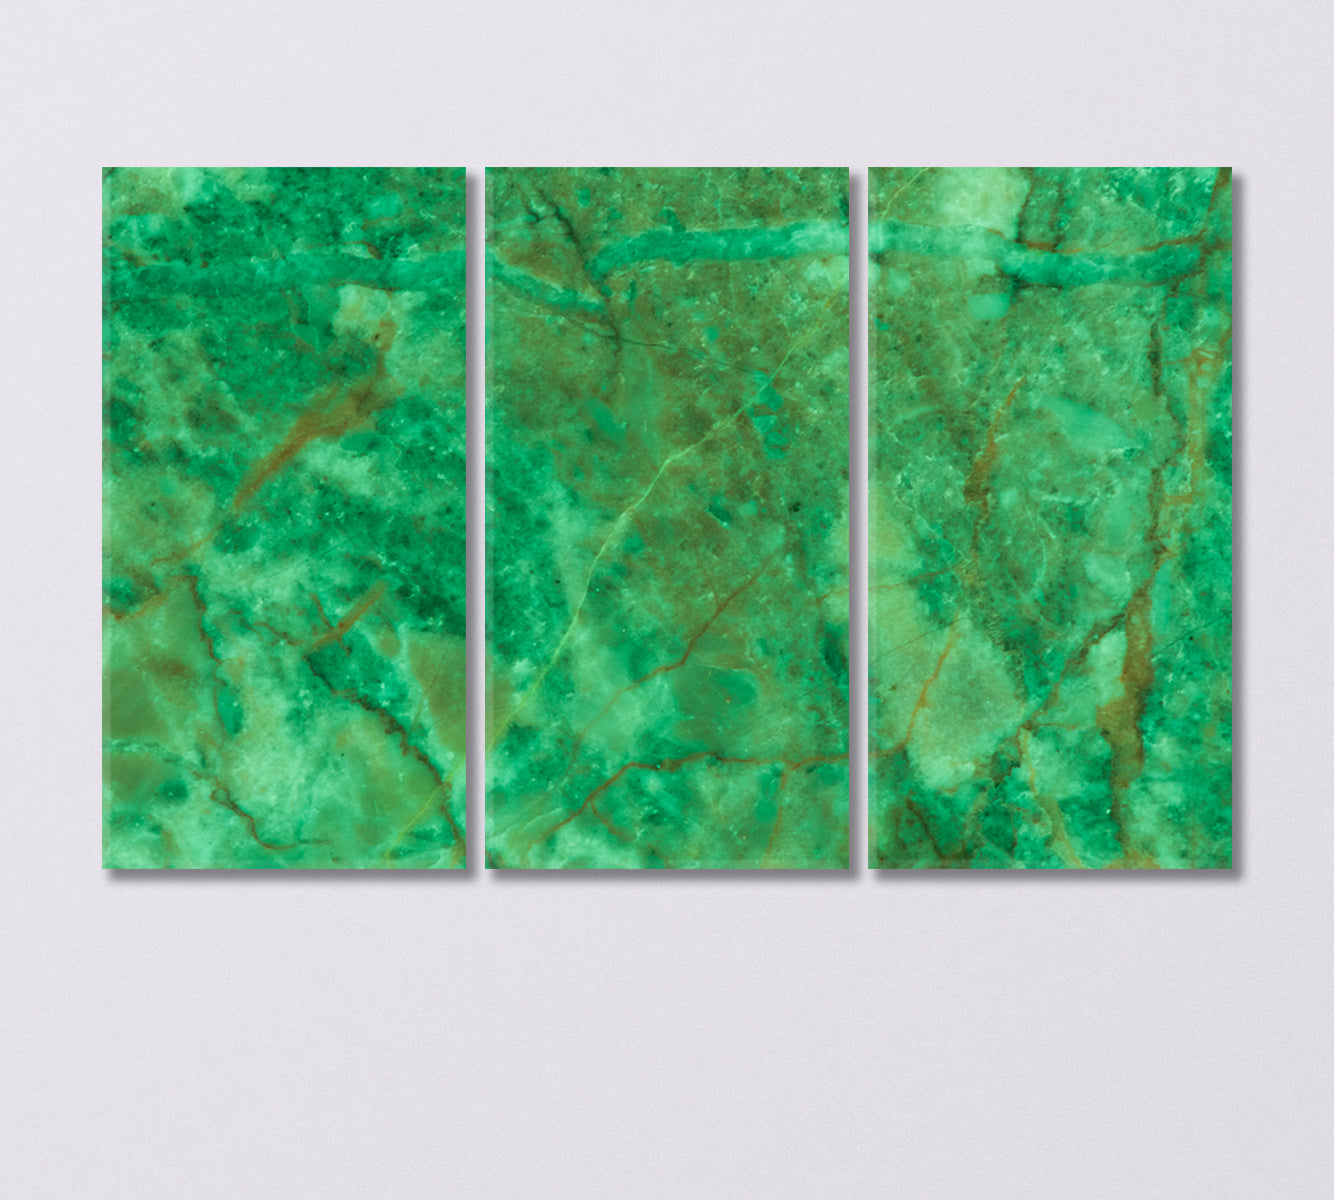 Green Marble Stone Wall Canvas Print-Canvas Print-CetArt-3 Panels-36x24 inches-CetArt